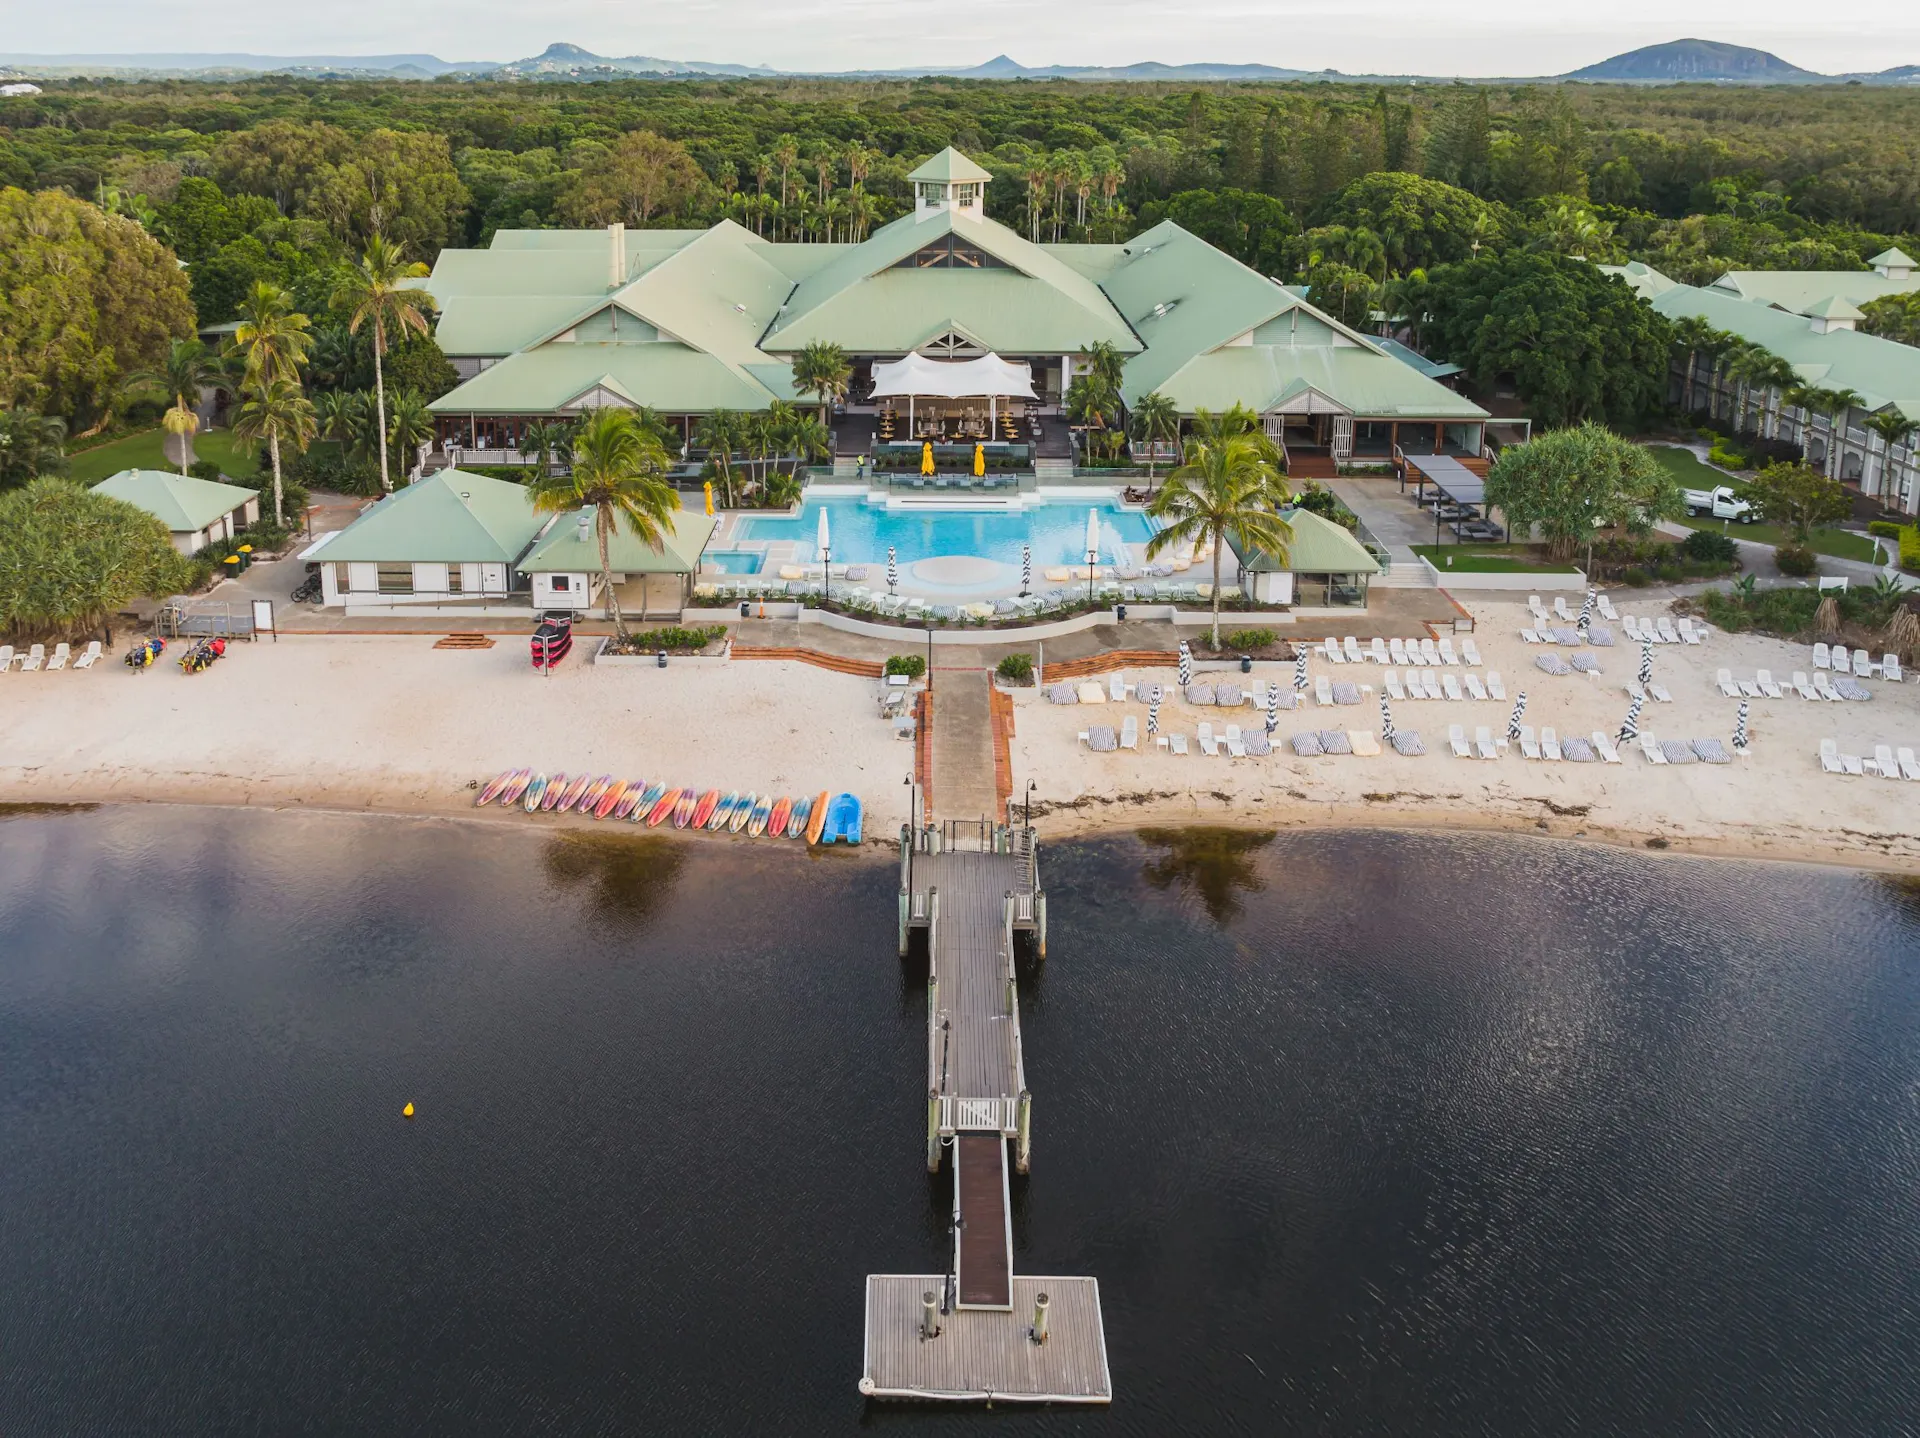 An aerial view of Novotel Sunshine Coast Resort holiday destination in Queensland